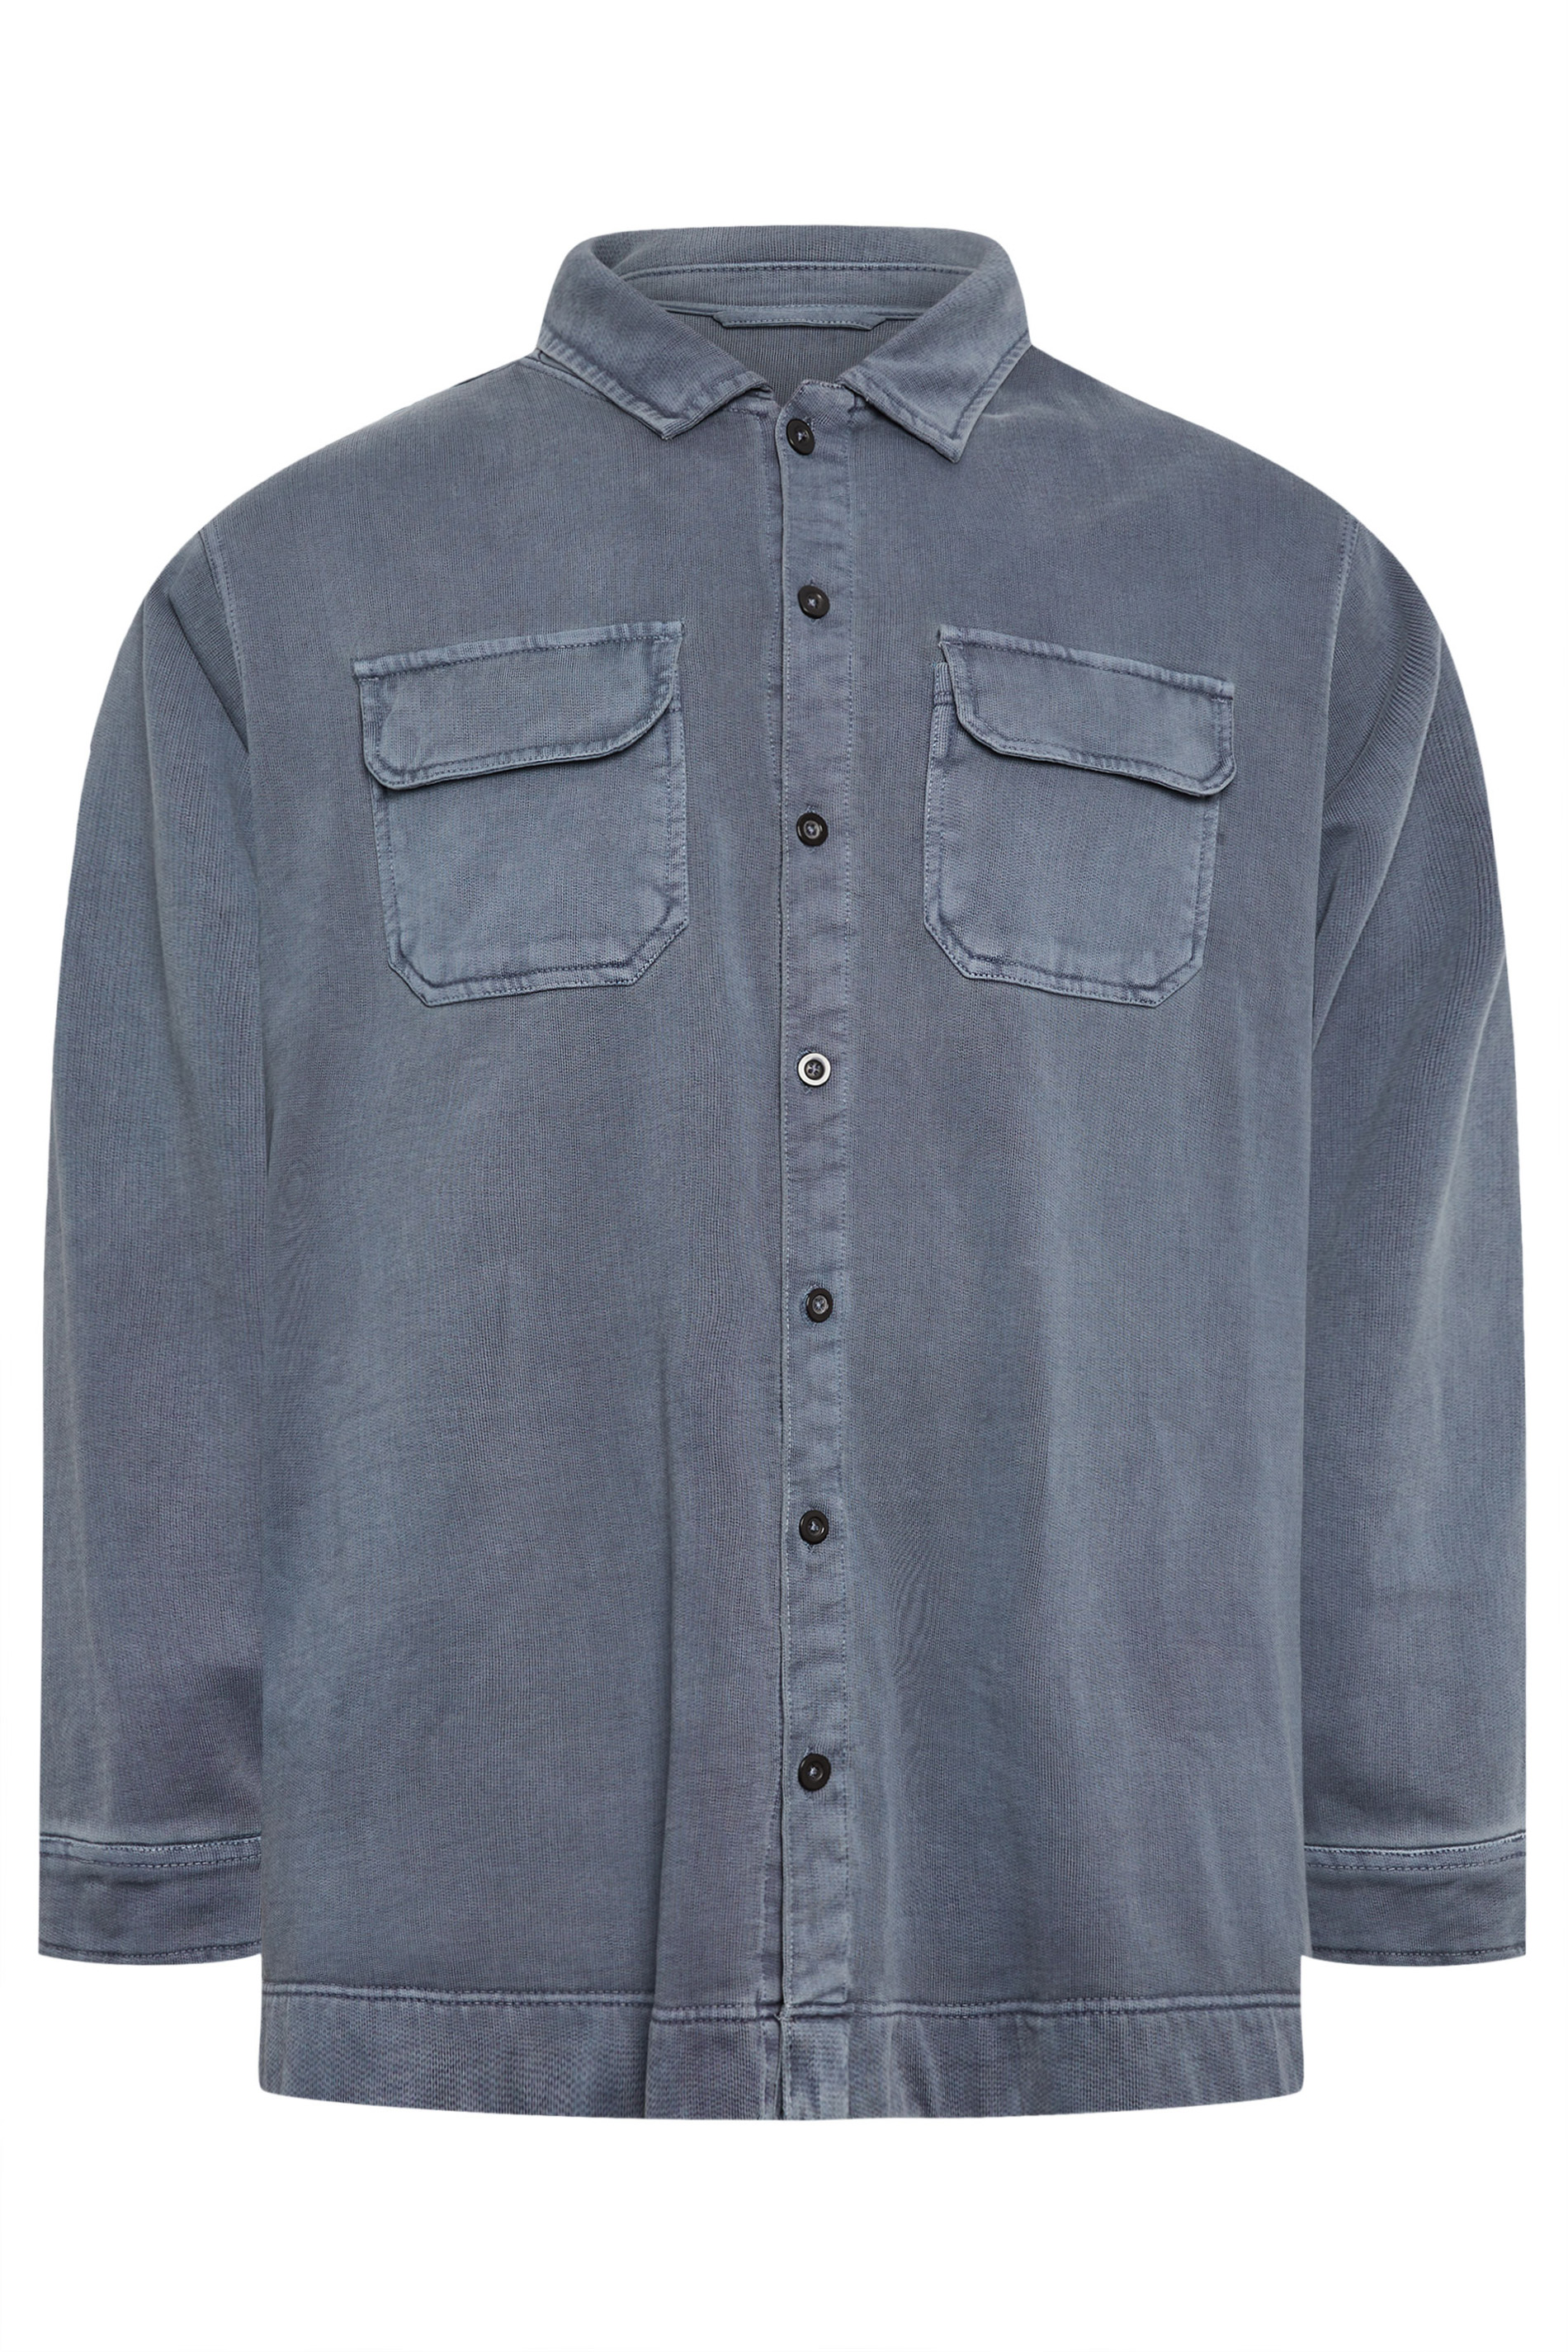 BadRhino Big & Tall Blue Garment Dyed Jersey Shacket | BadRhino